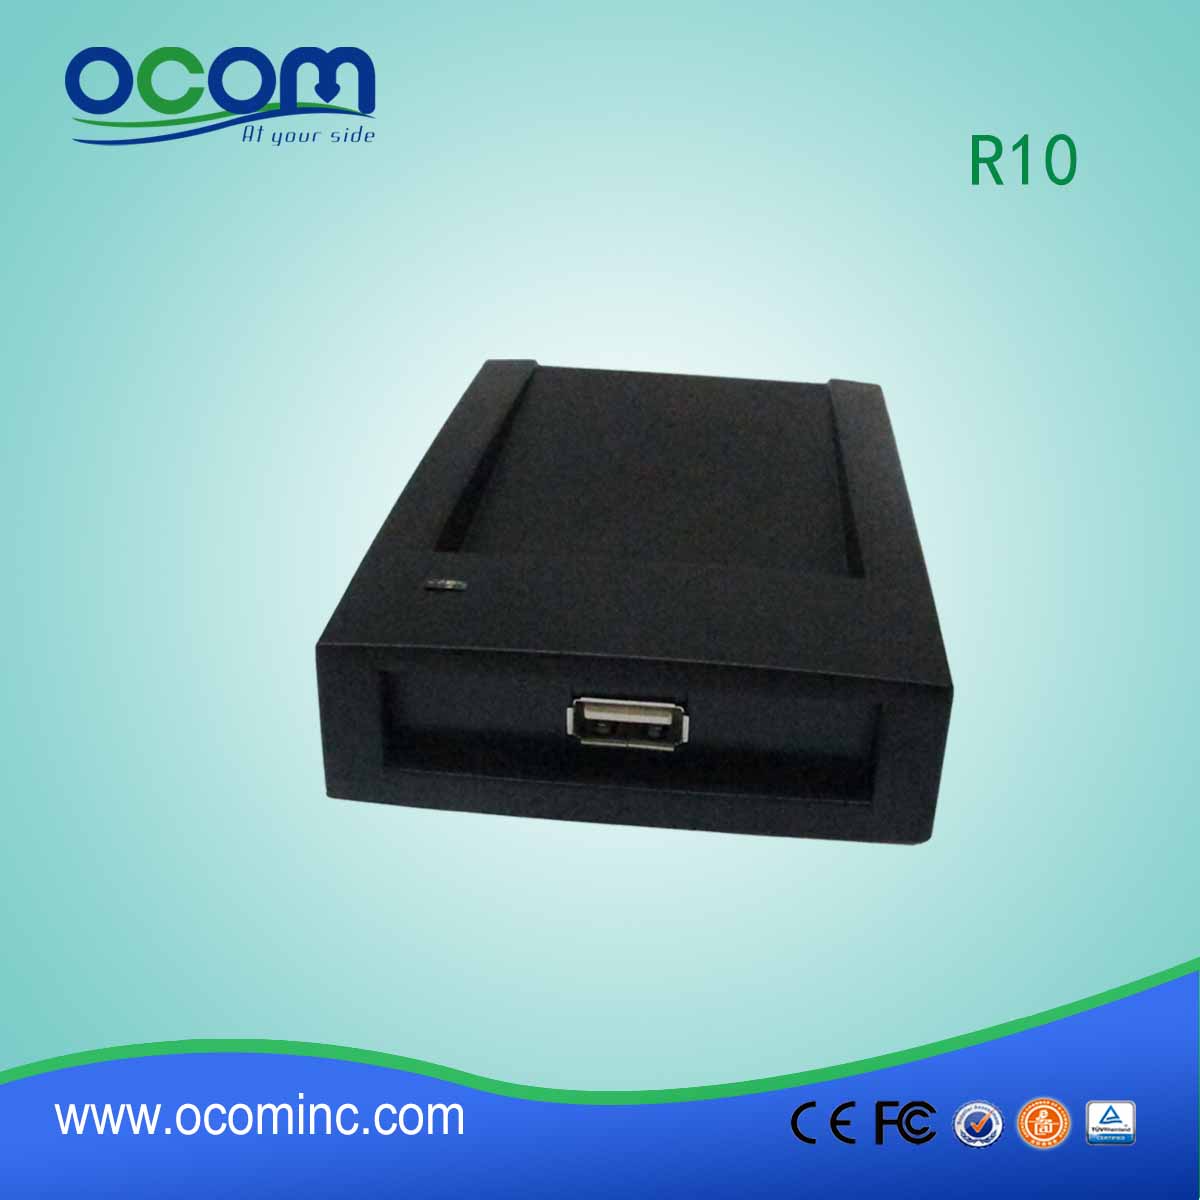 OCOM-R10 Lector de tarjetas RFID USB Plug and Play para 125KHZ / 13.56MHZ